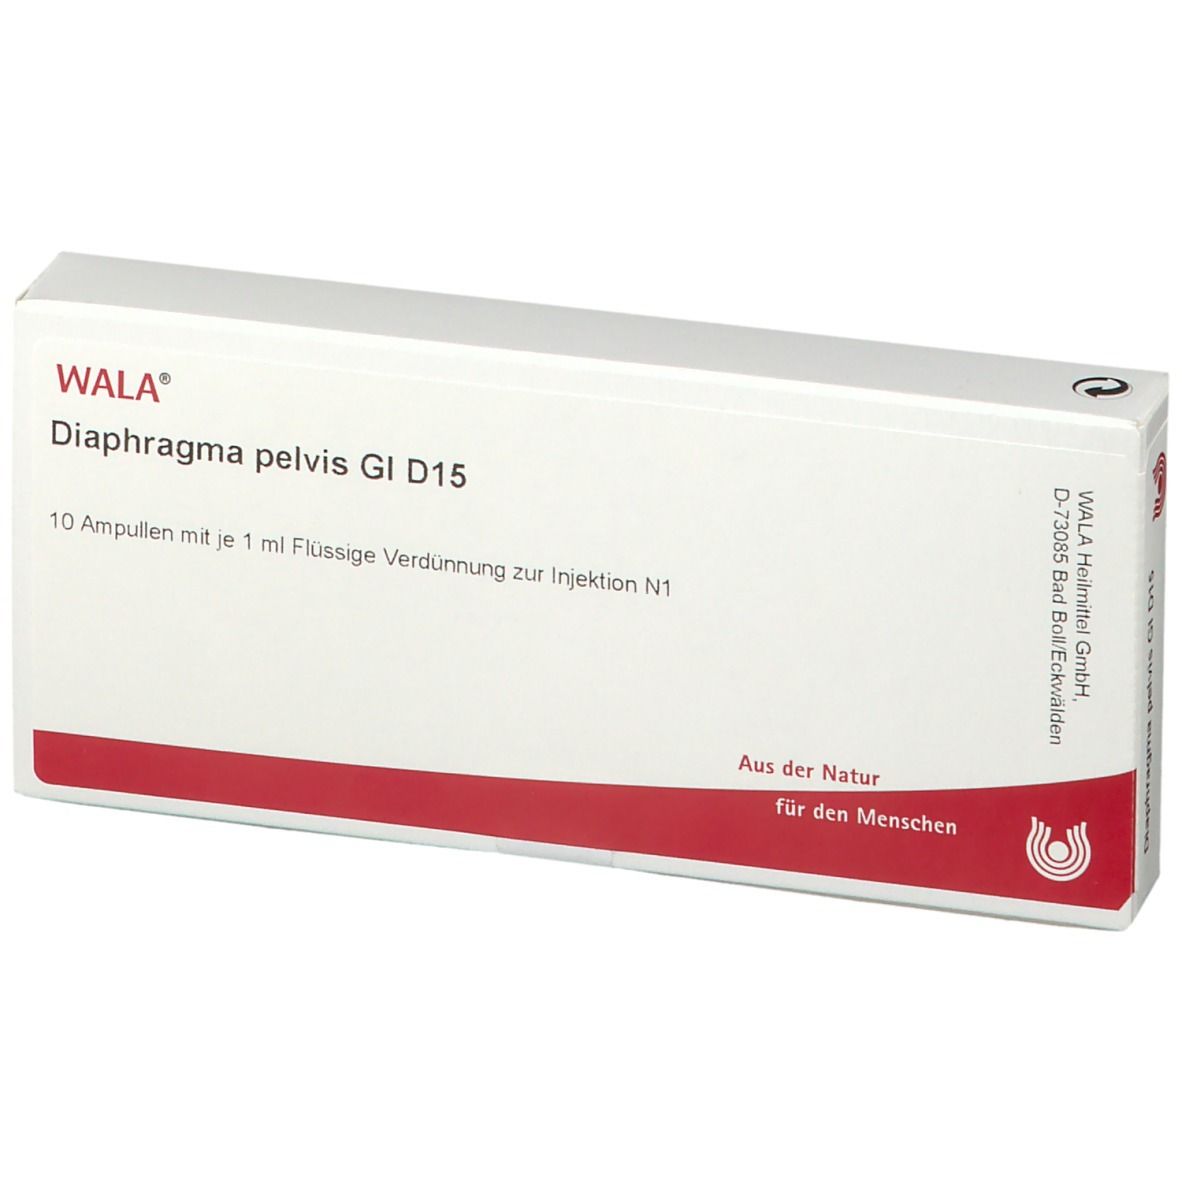 WALA® Diaphragma pelvis Gl D 15